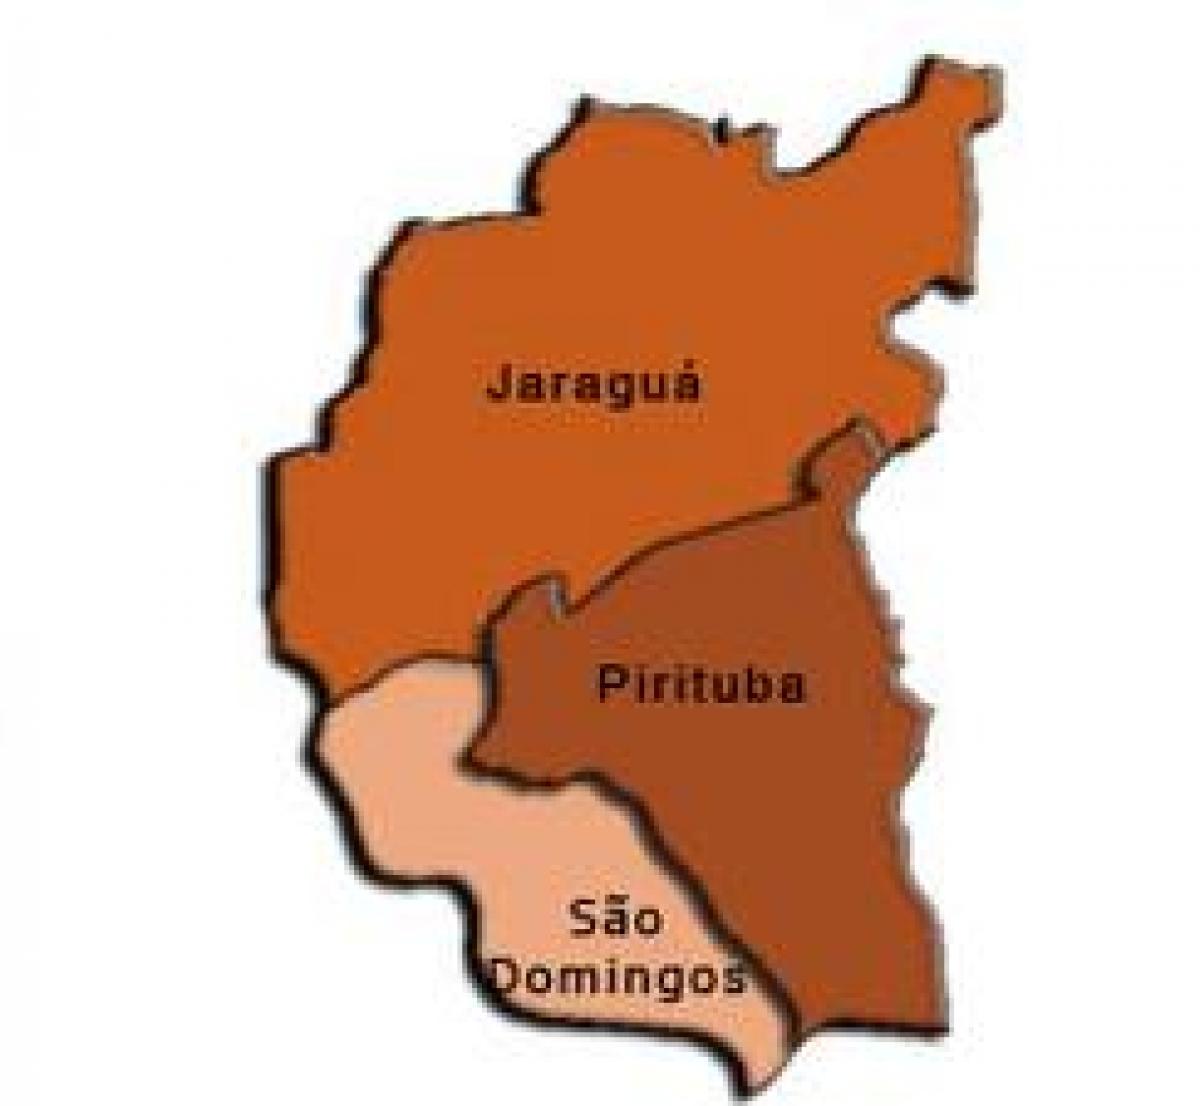 Harta e Pirituba-Jaraguá nën-prefekturës